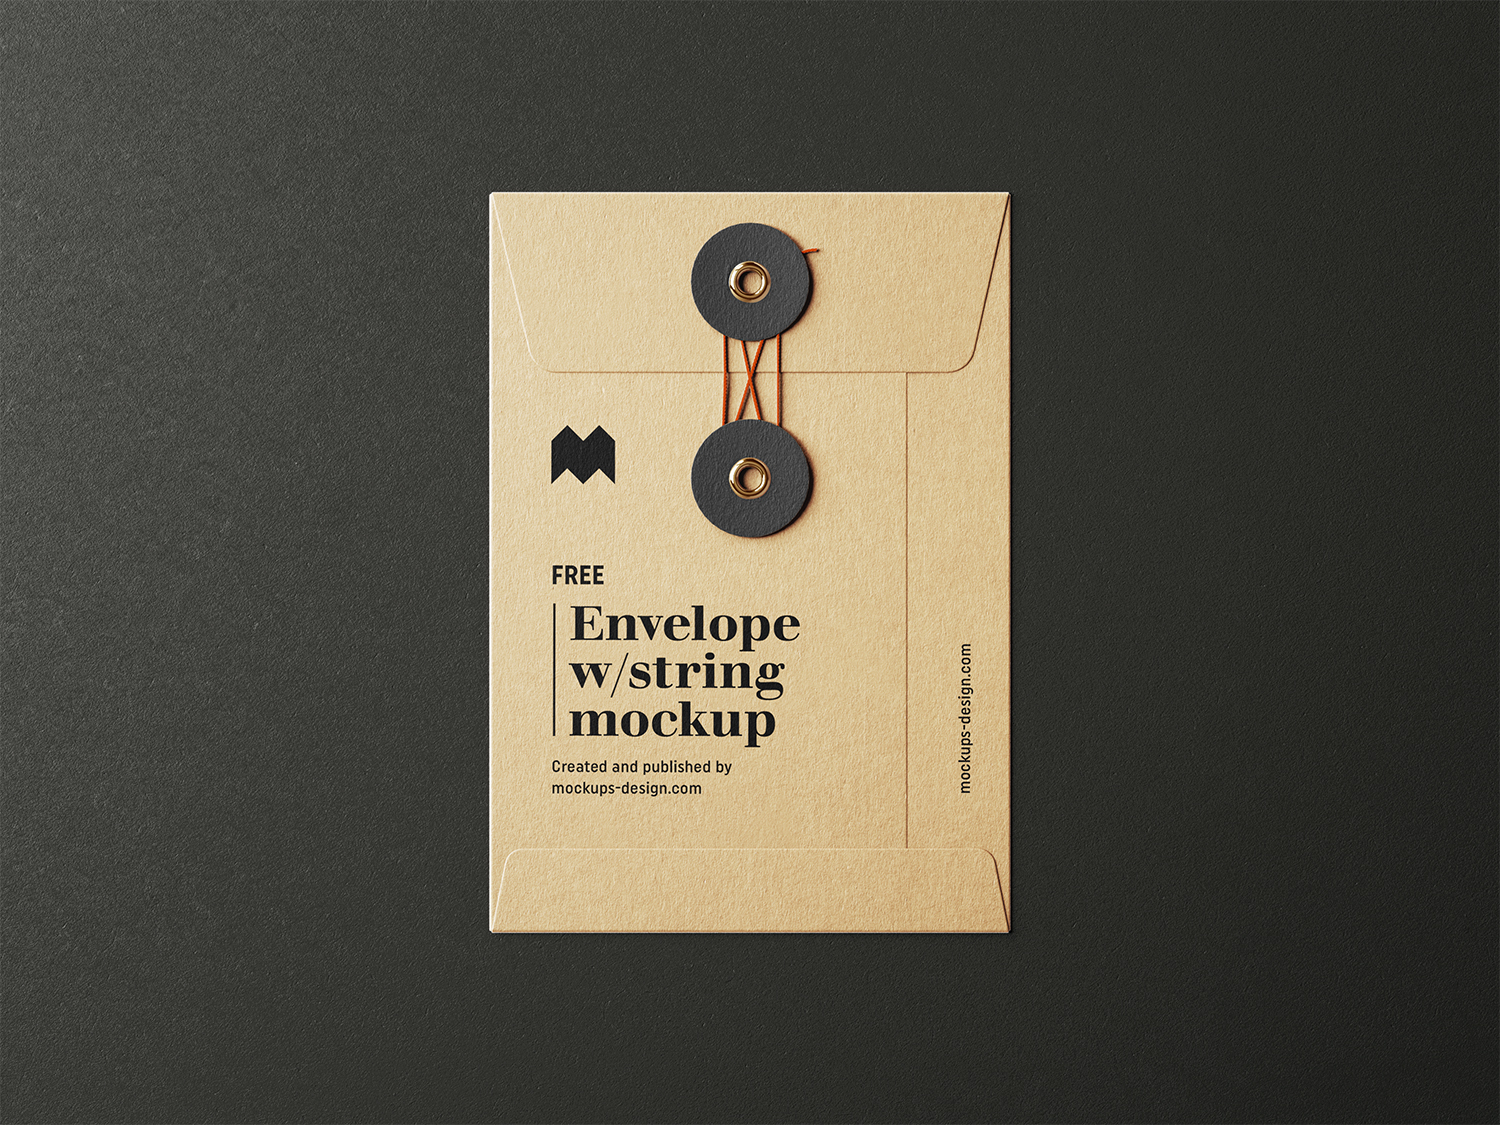 Free Envelope with String Mockup